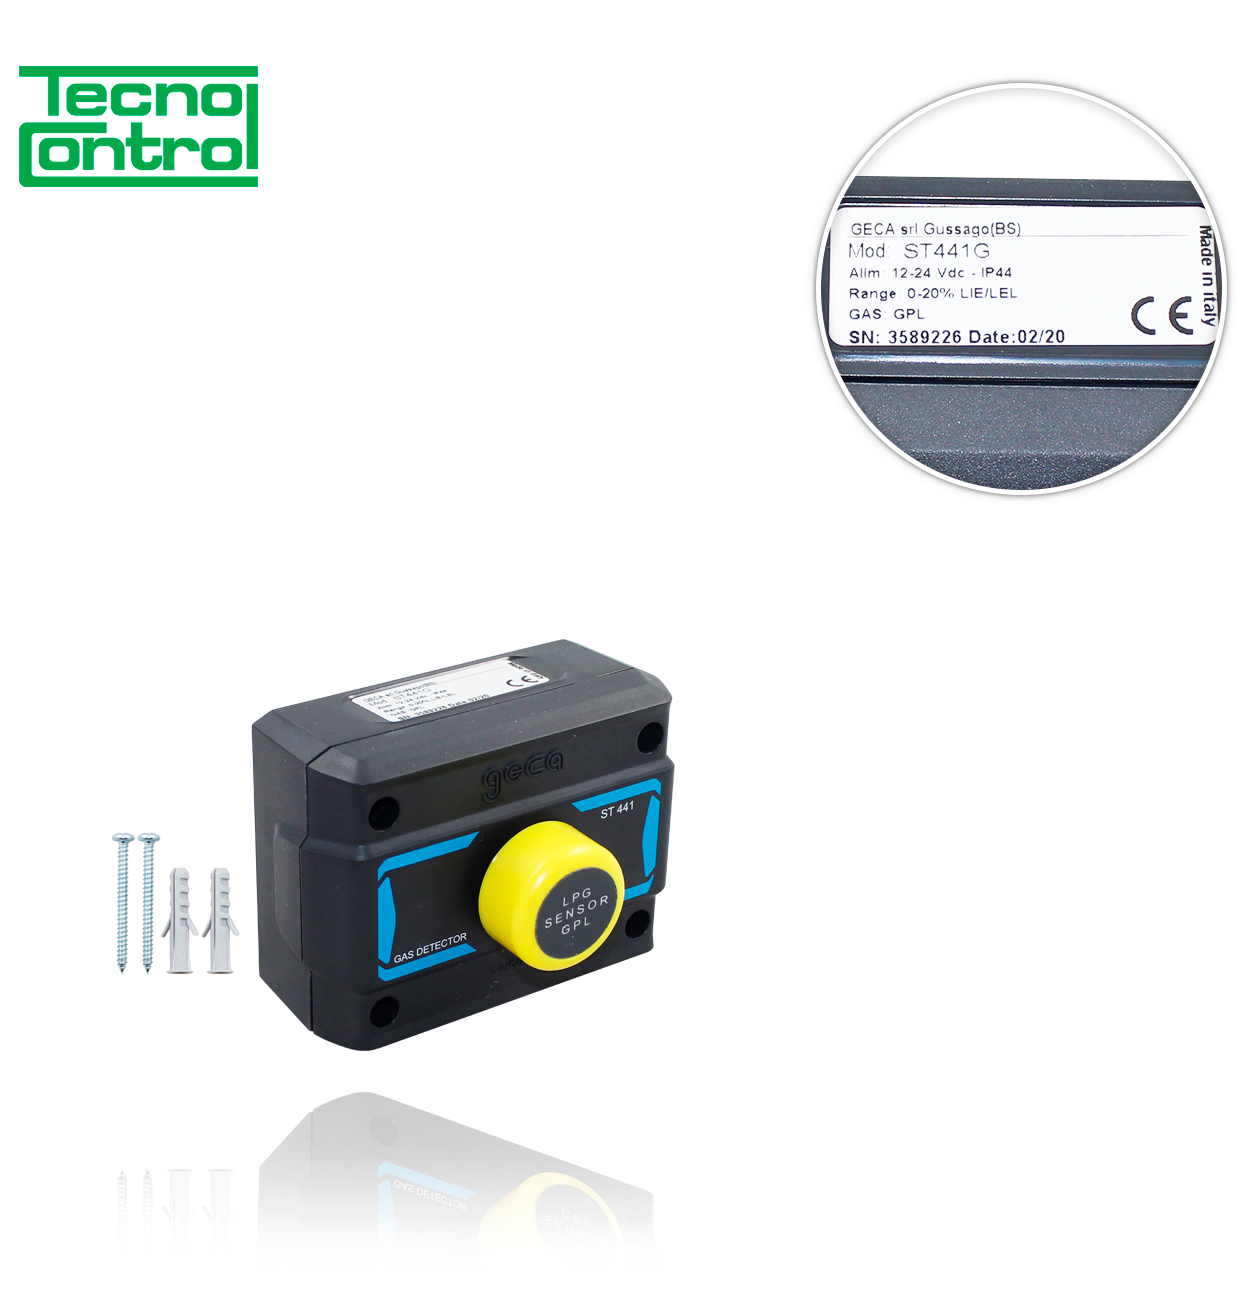 SE 192- ST441G TECNOCONTROL GAS SENSOR calibrated for LPG (KG_LPG)